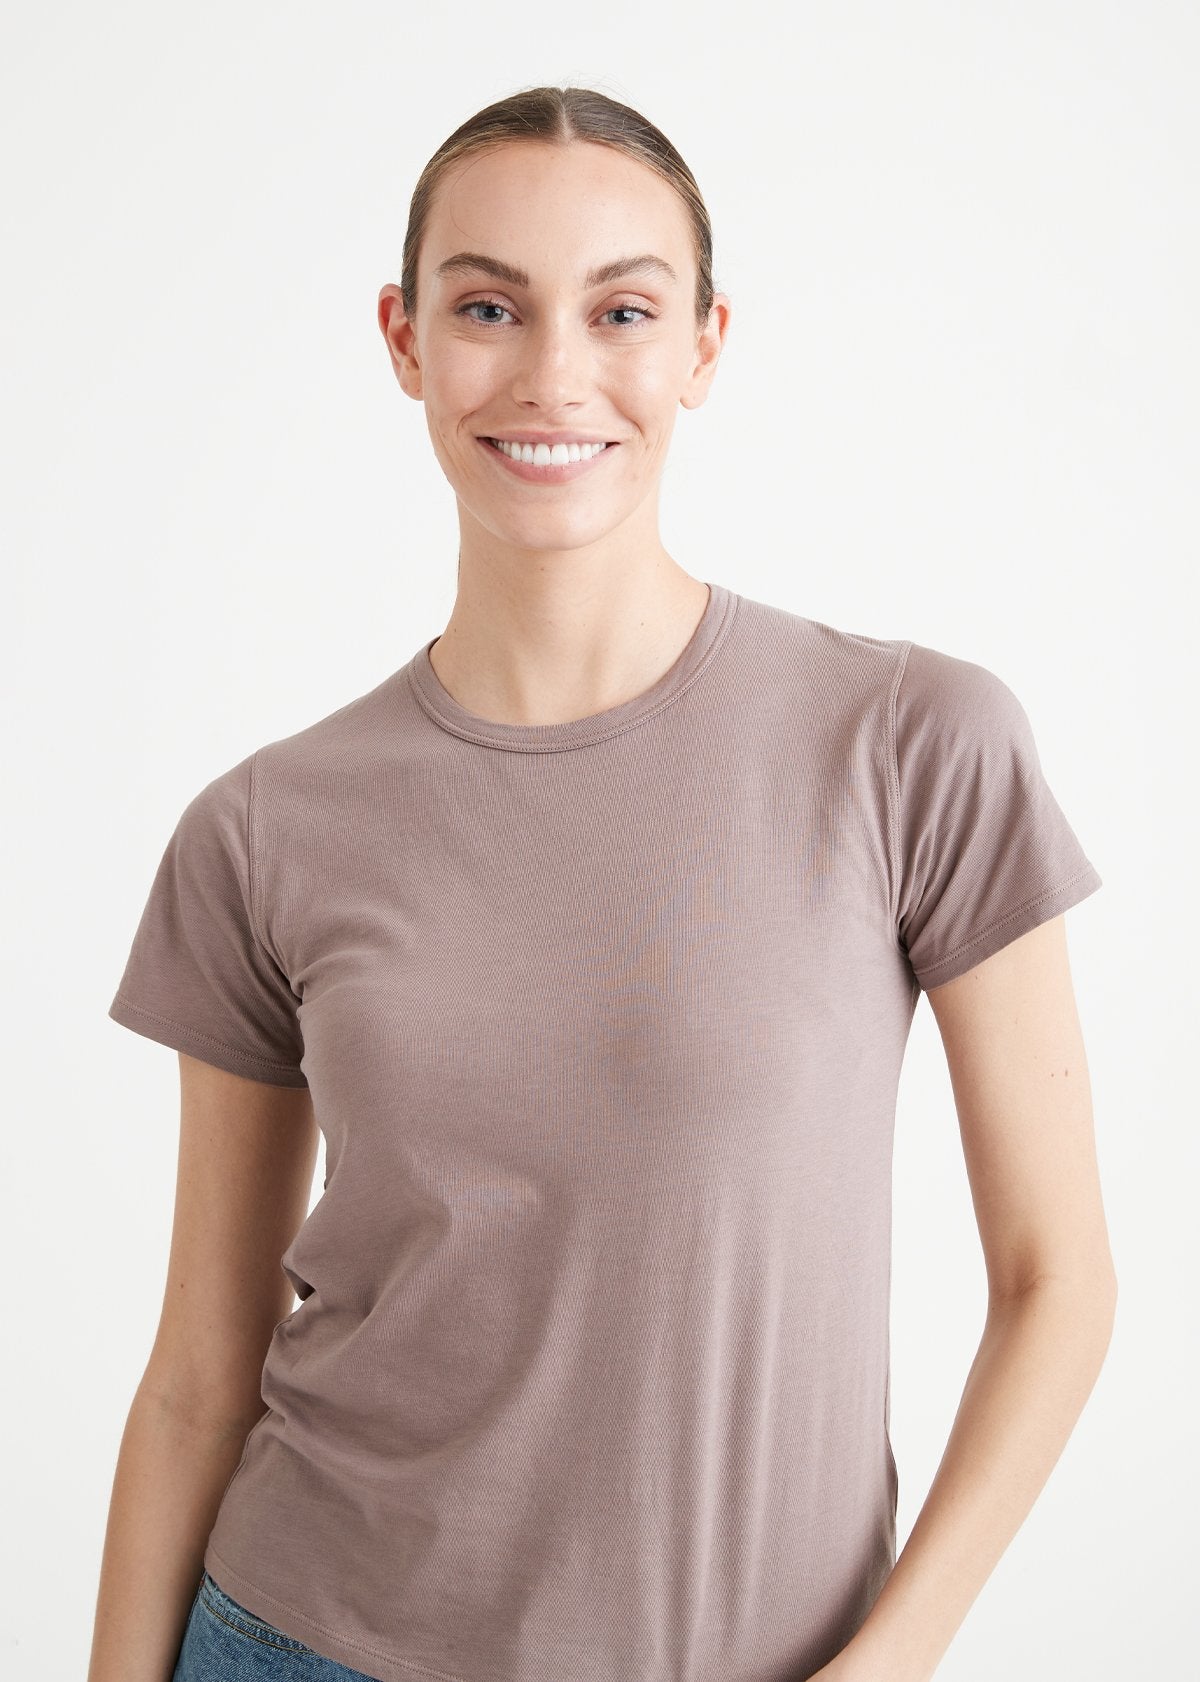 Women's light brown lightweight soft crew tshirt front smiling